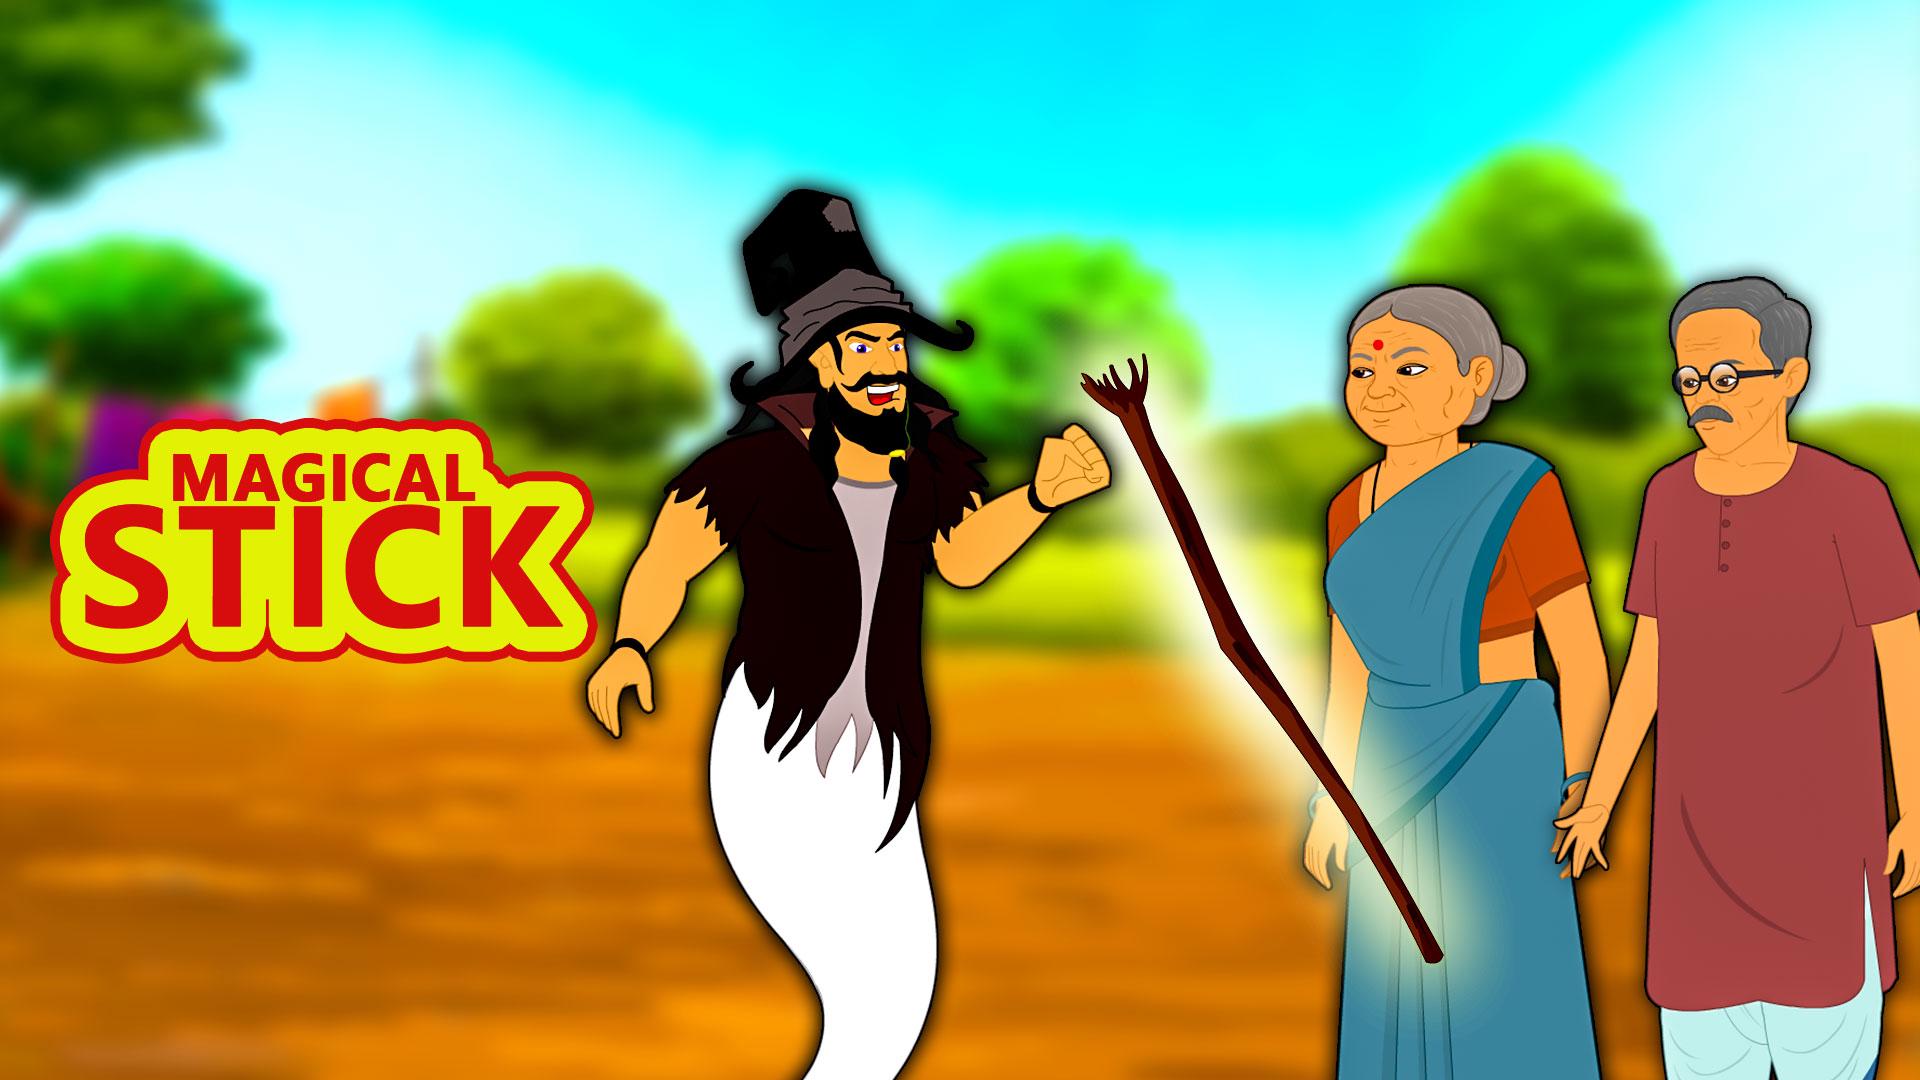 Watch The Magical Stick Telugu Kids Movie Online in 2021